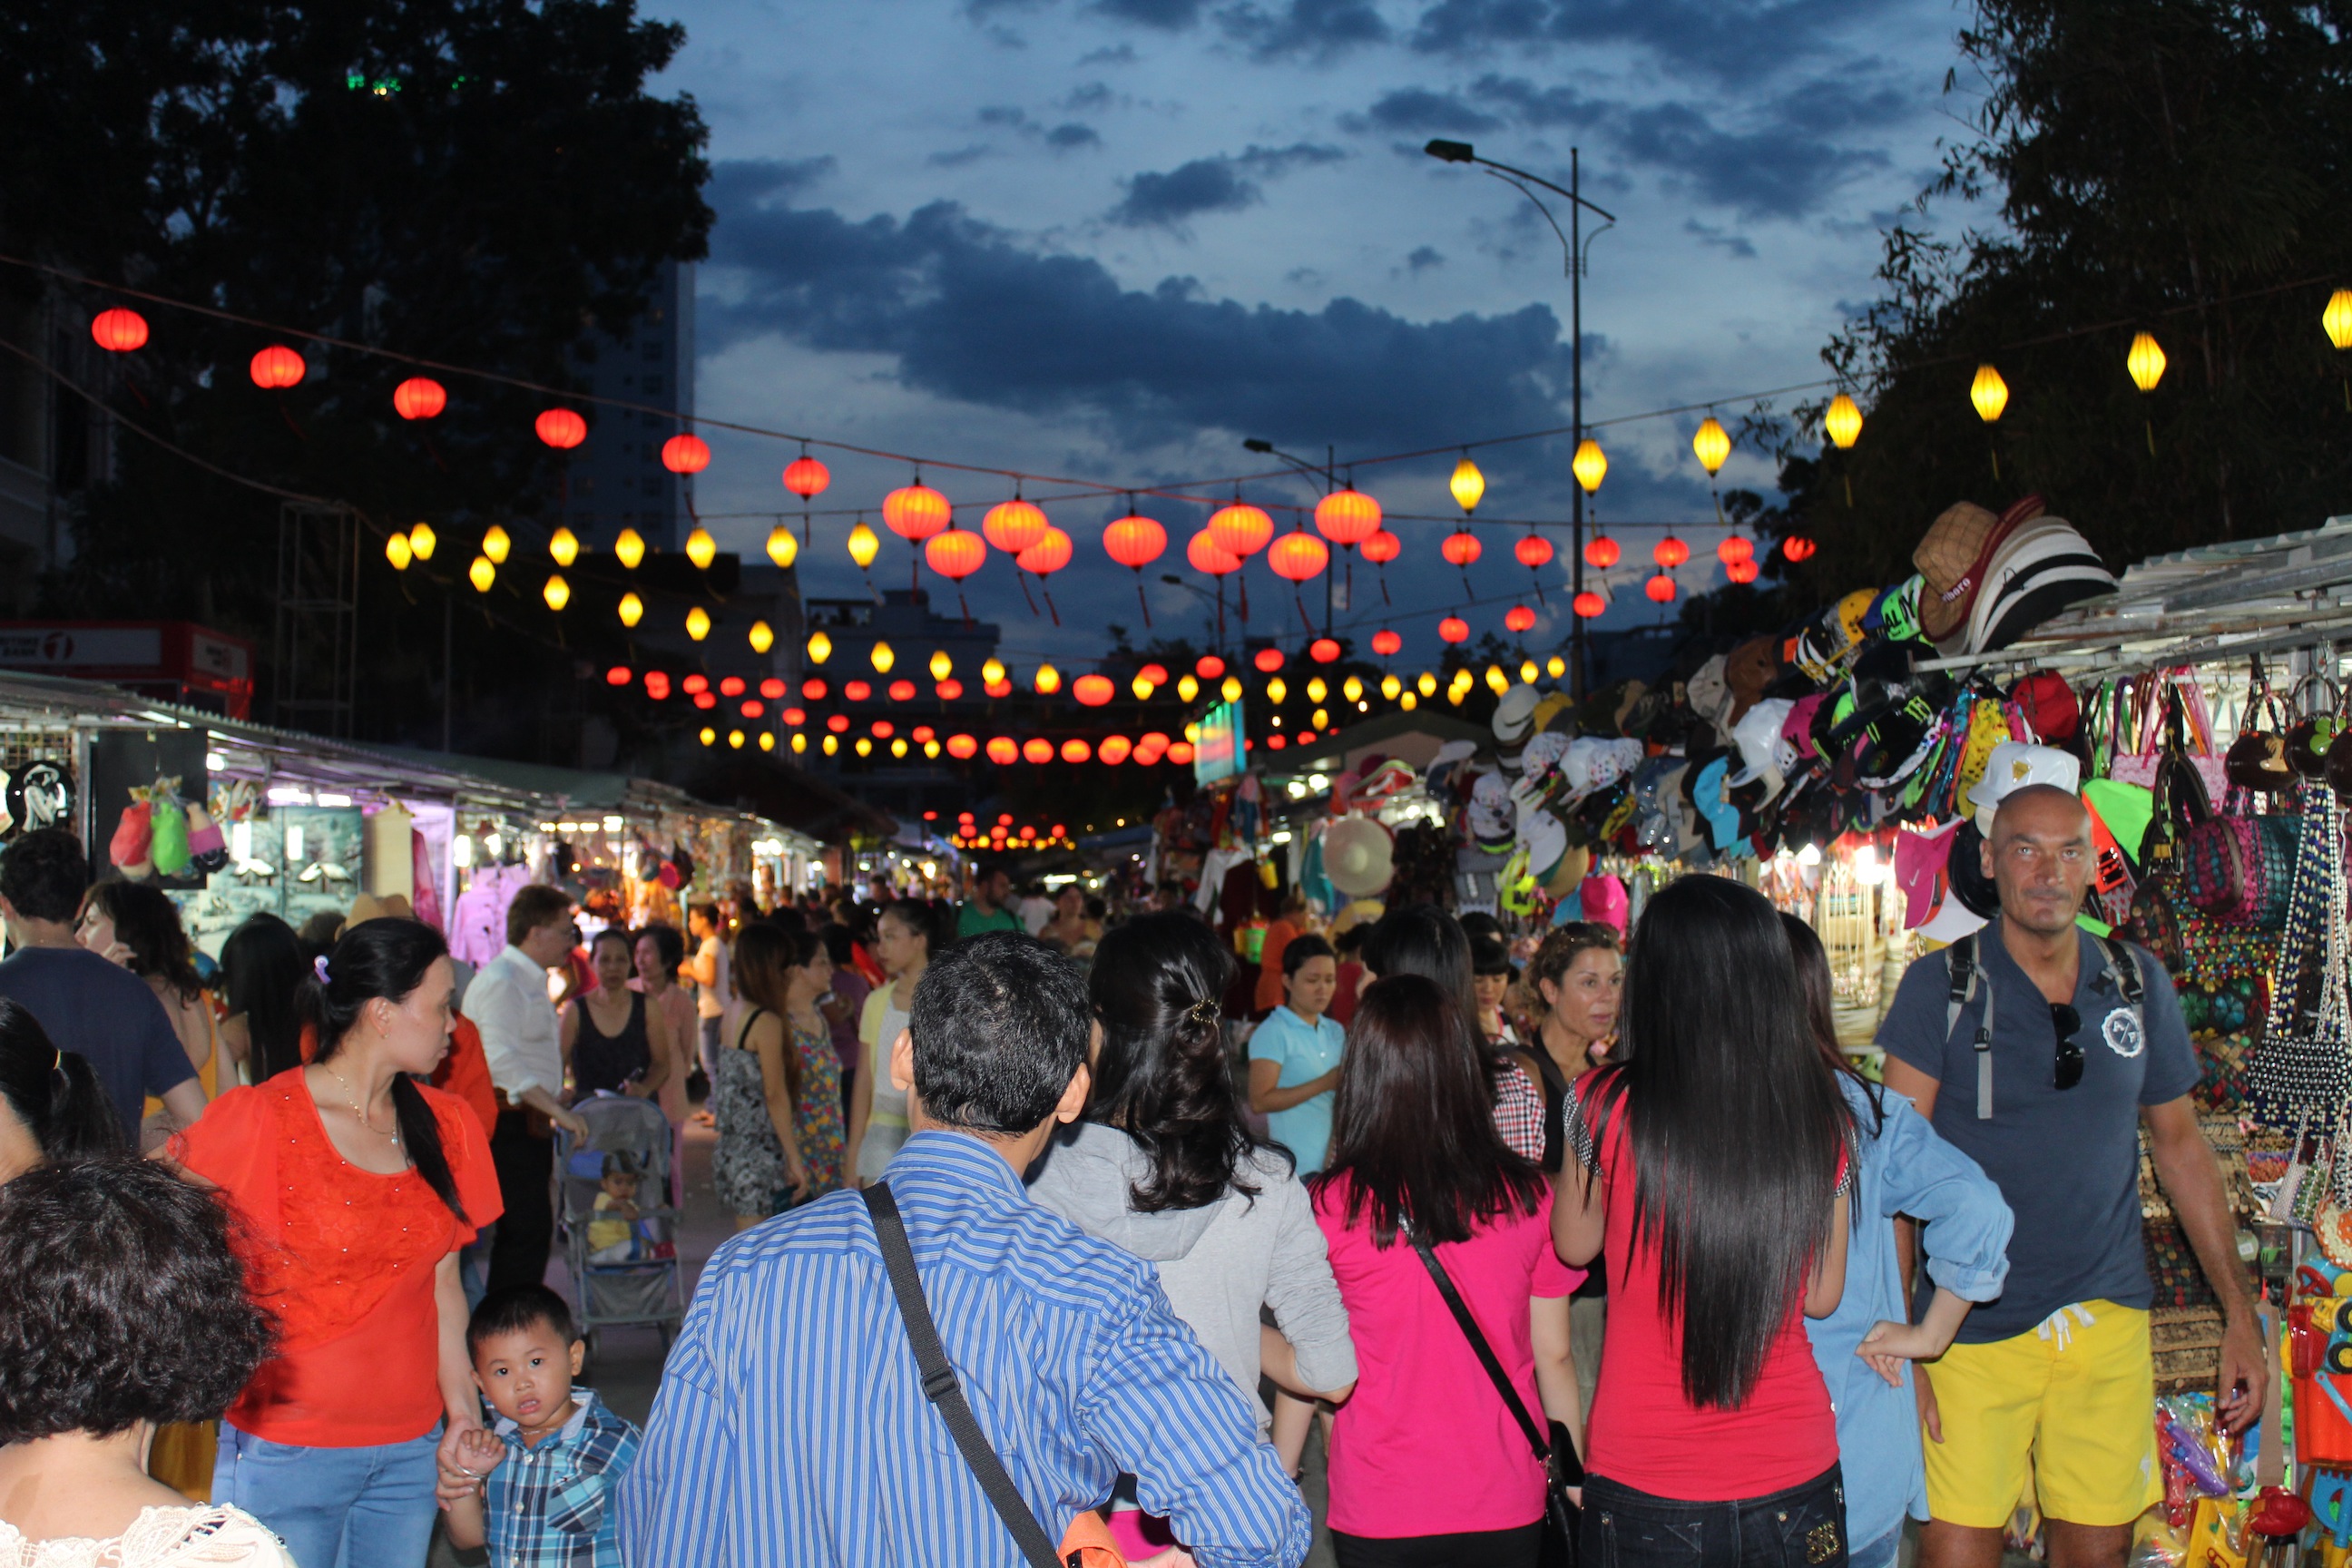 The night market in Nha Trang